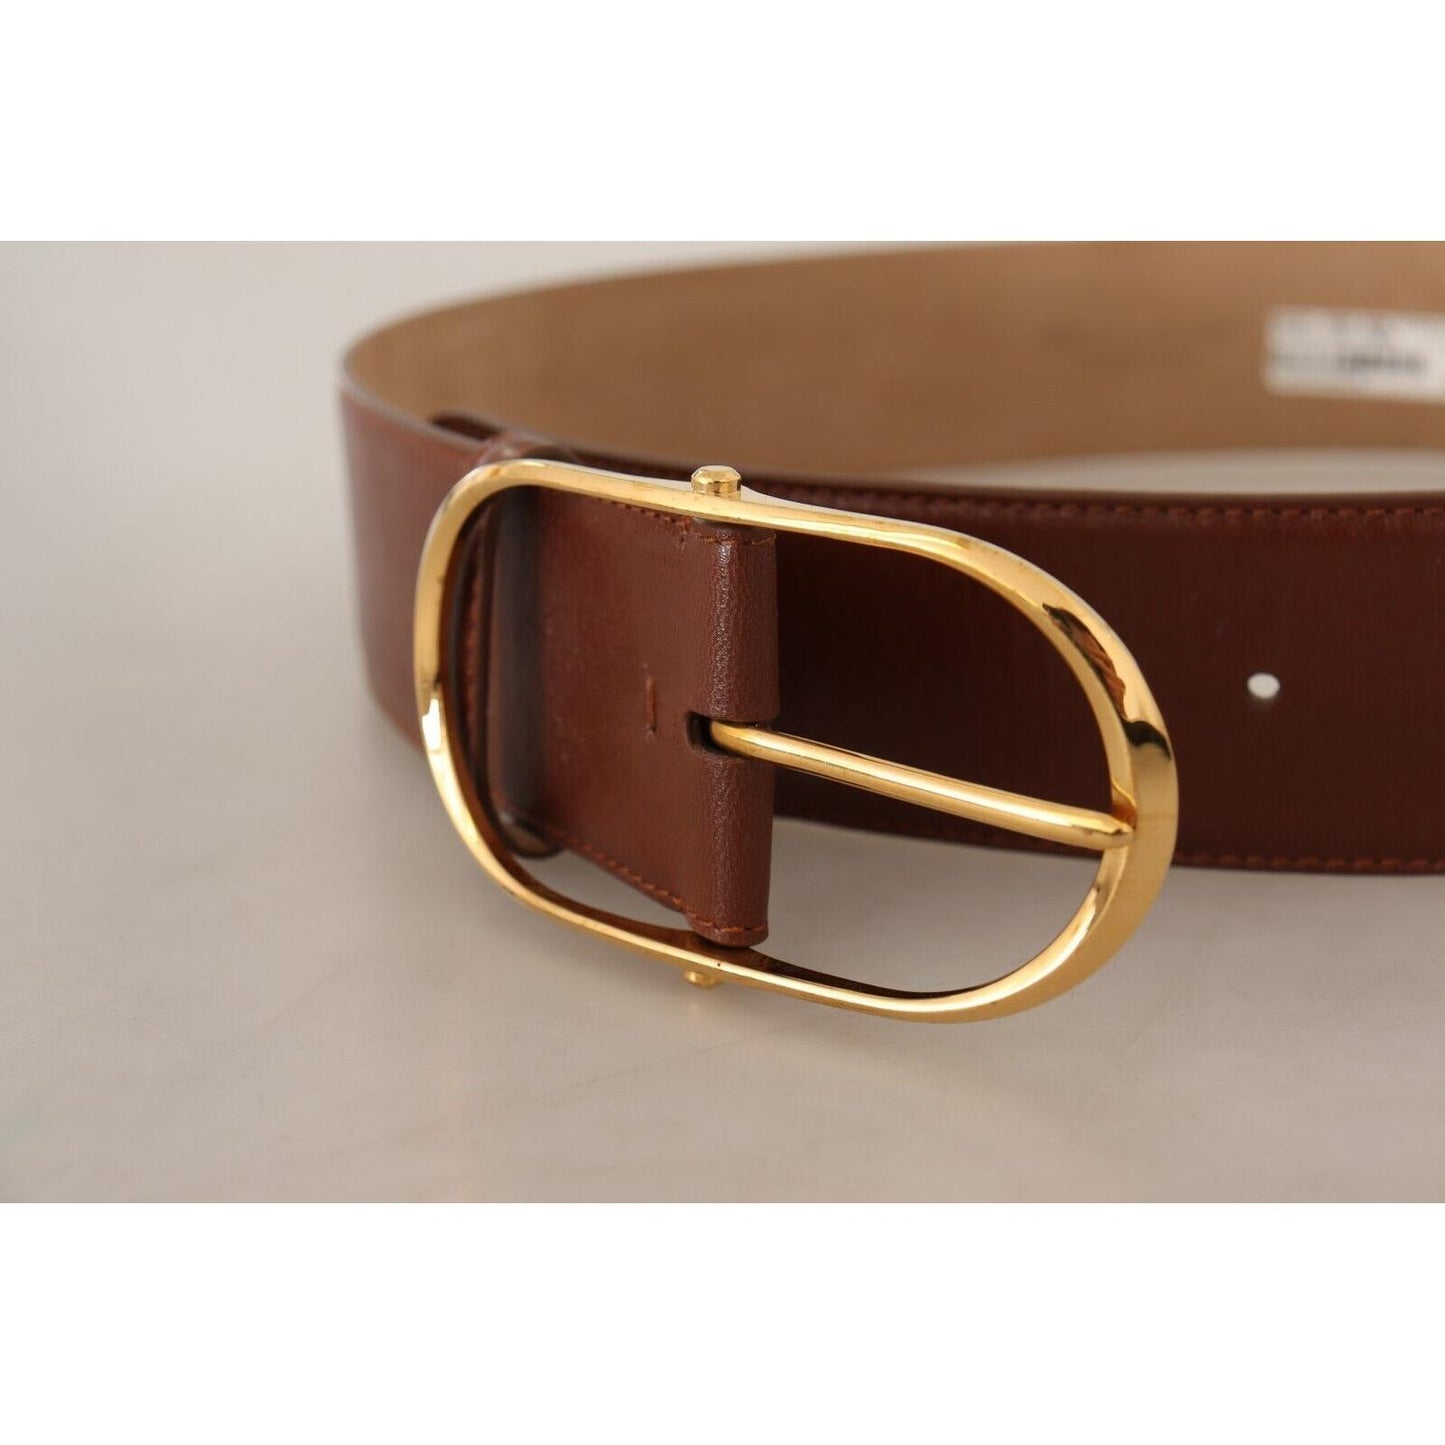 Dolce & Gabbana Elegant Brown Leather Belt with Gold Buckle brown-leather-gold-metal-oval-buckle-belt-2 s-l1600-2-240-9d5f4917-4c2.jpg